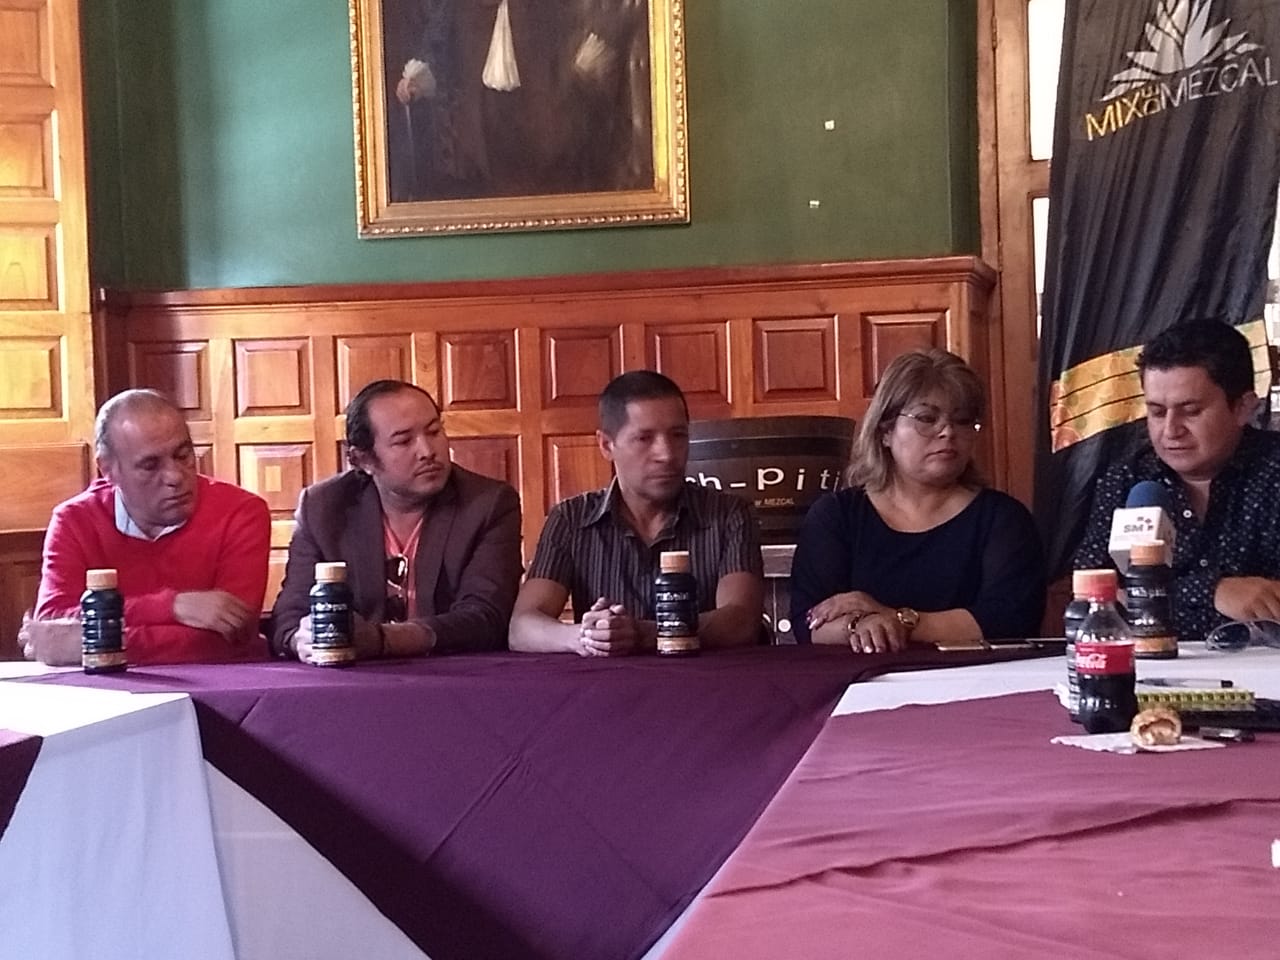 Asociación "Rie", denuncia venta de pelucas oncologícas en Morelia por parte de ex colaborador